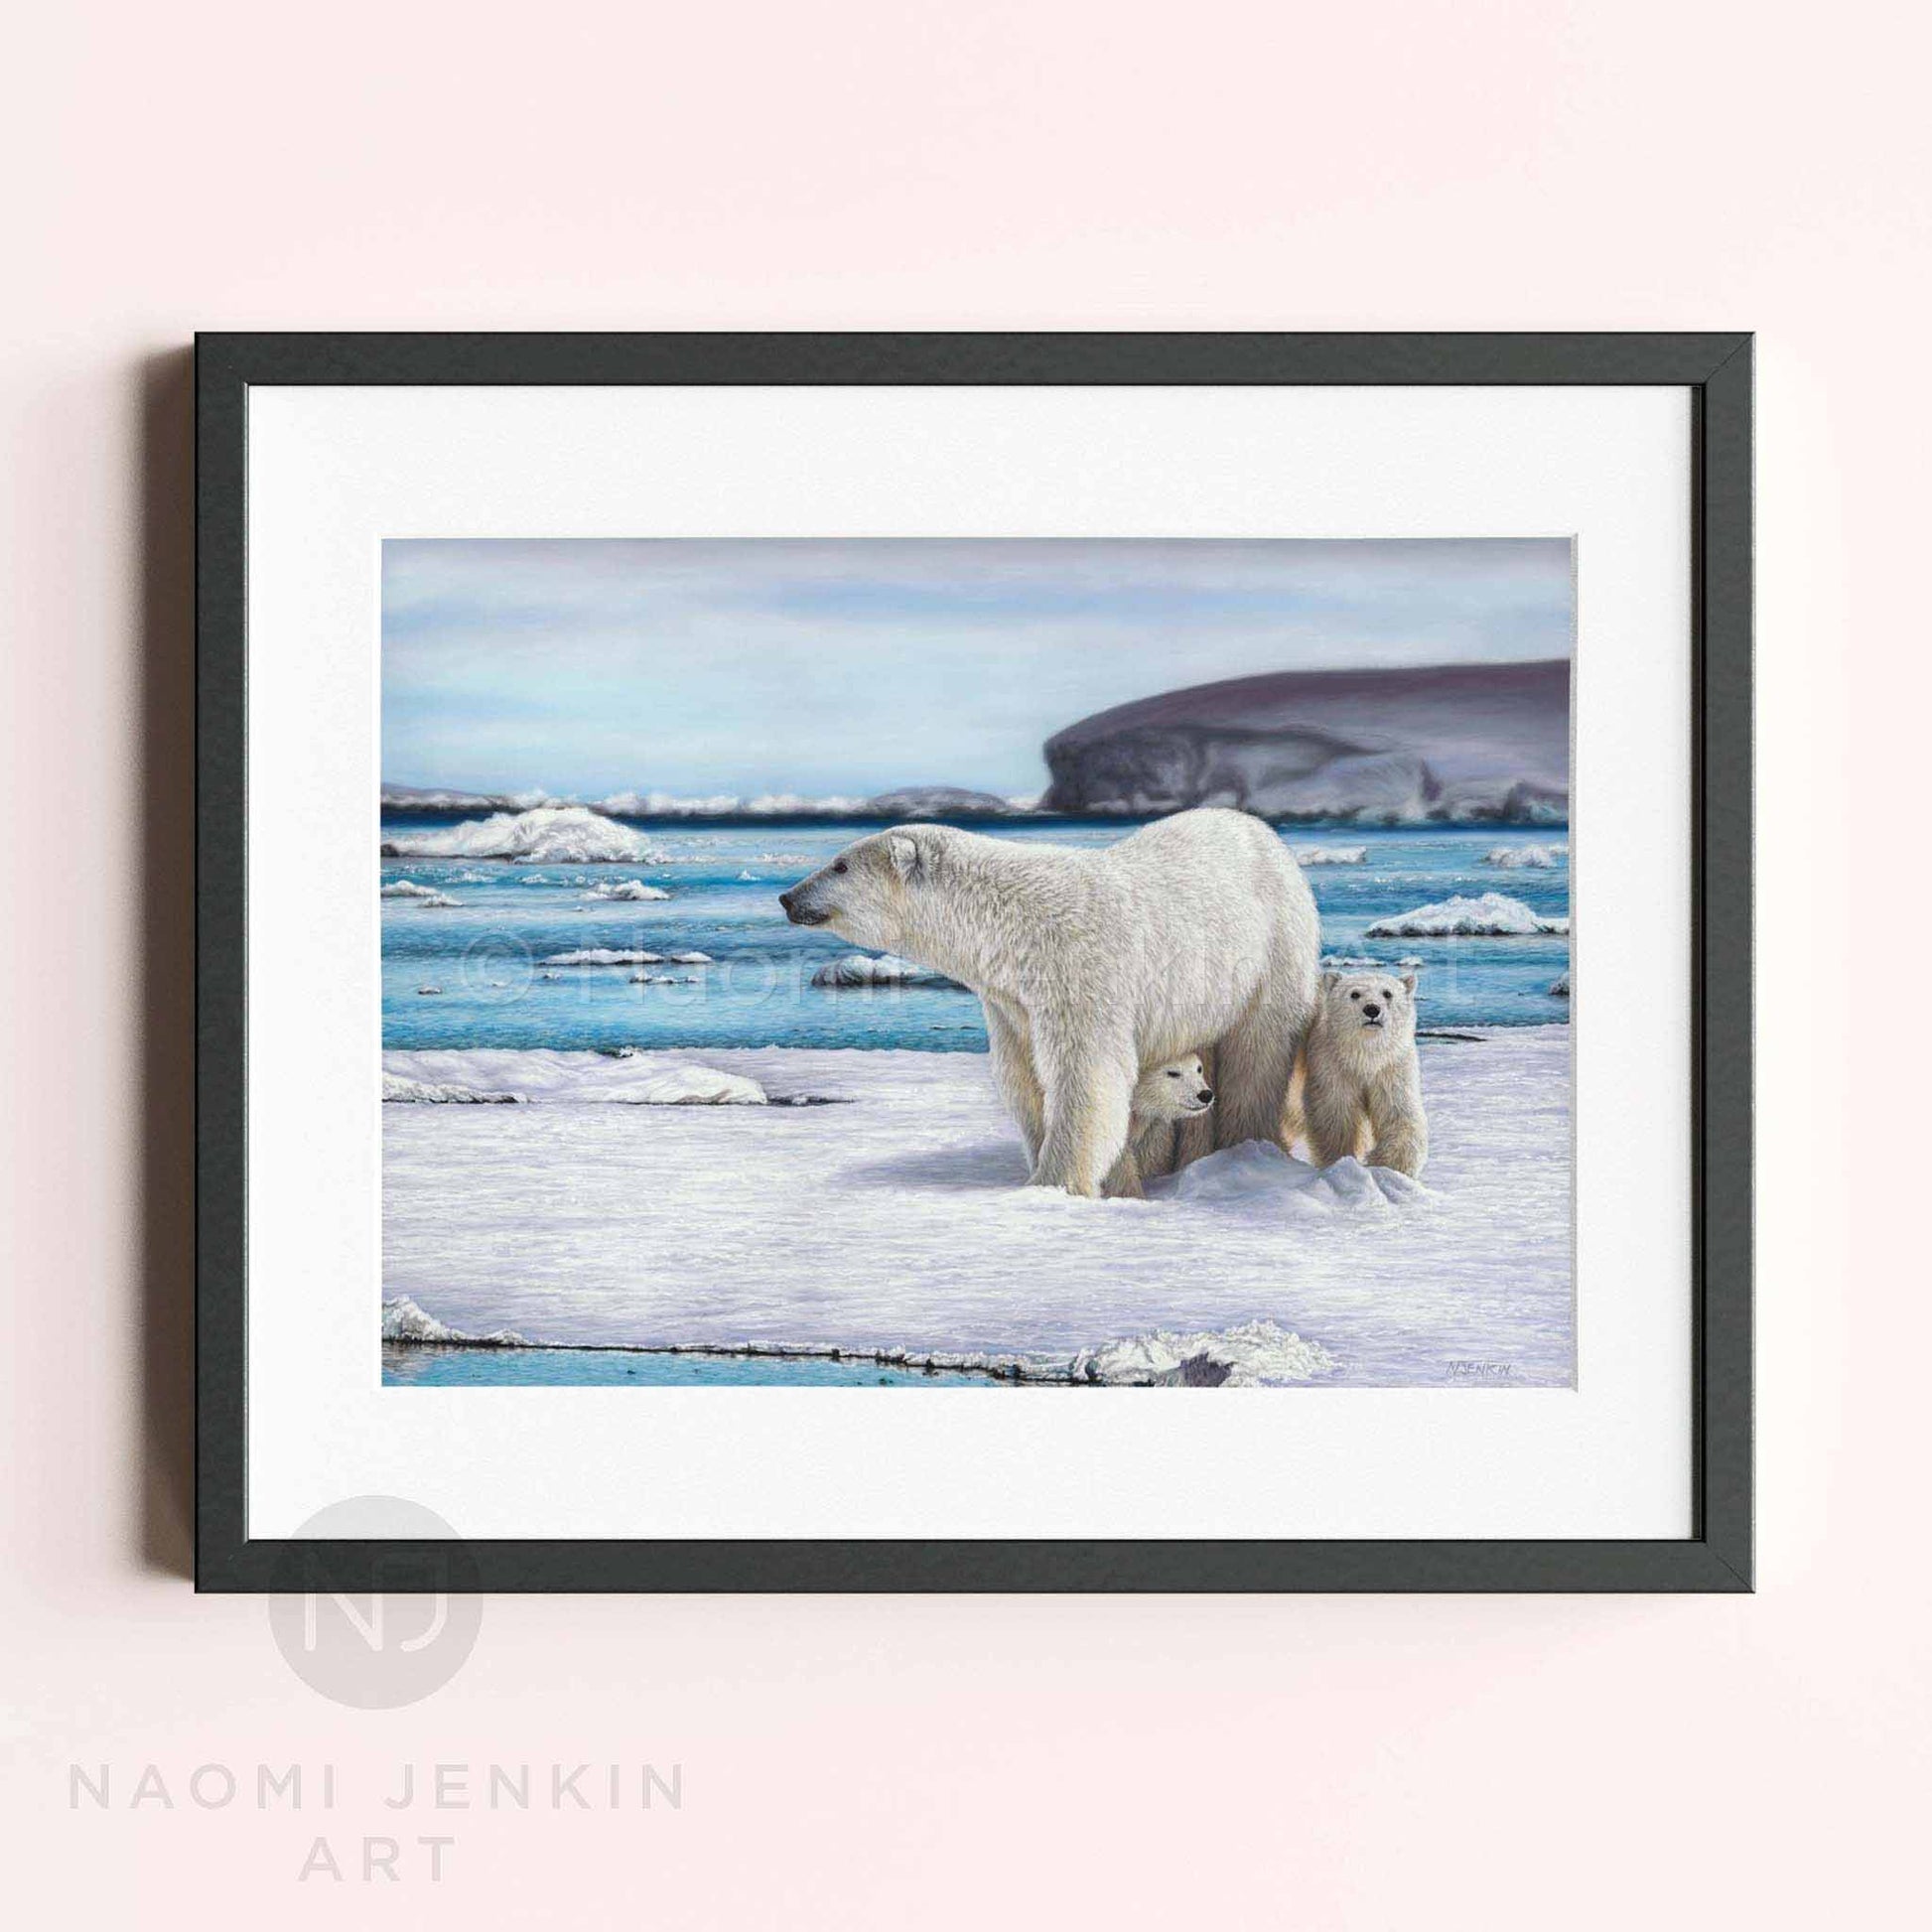 Framed original polar bear painting by Naomi Jenkin